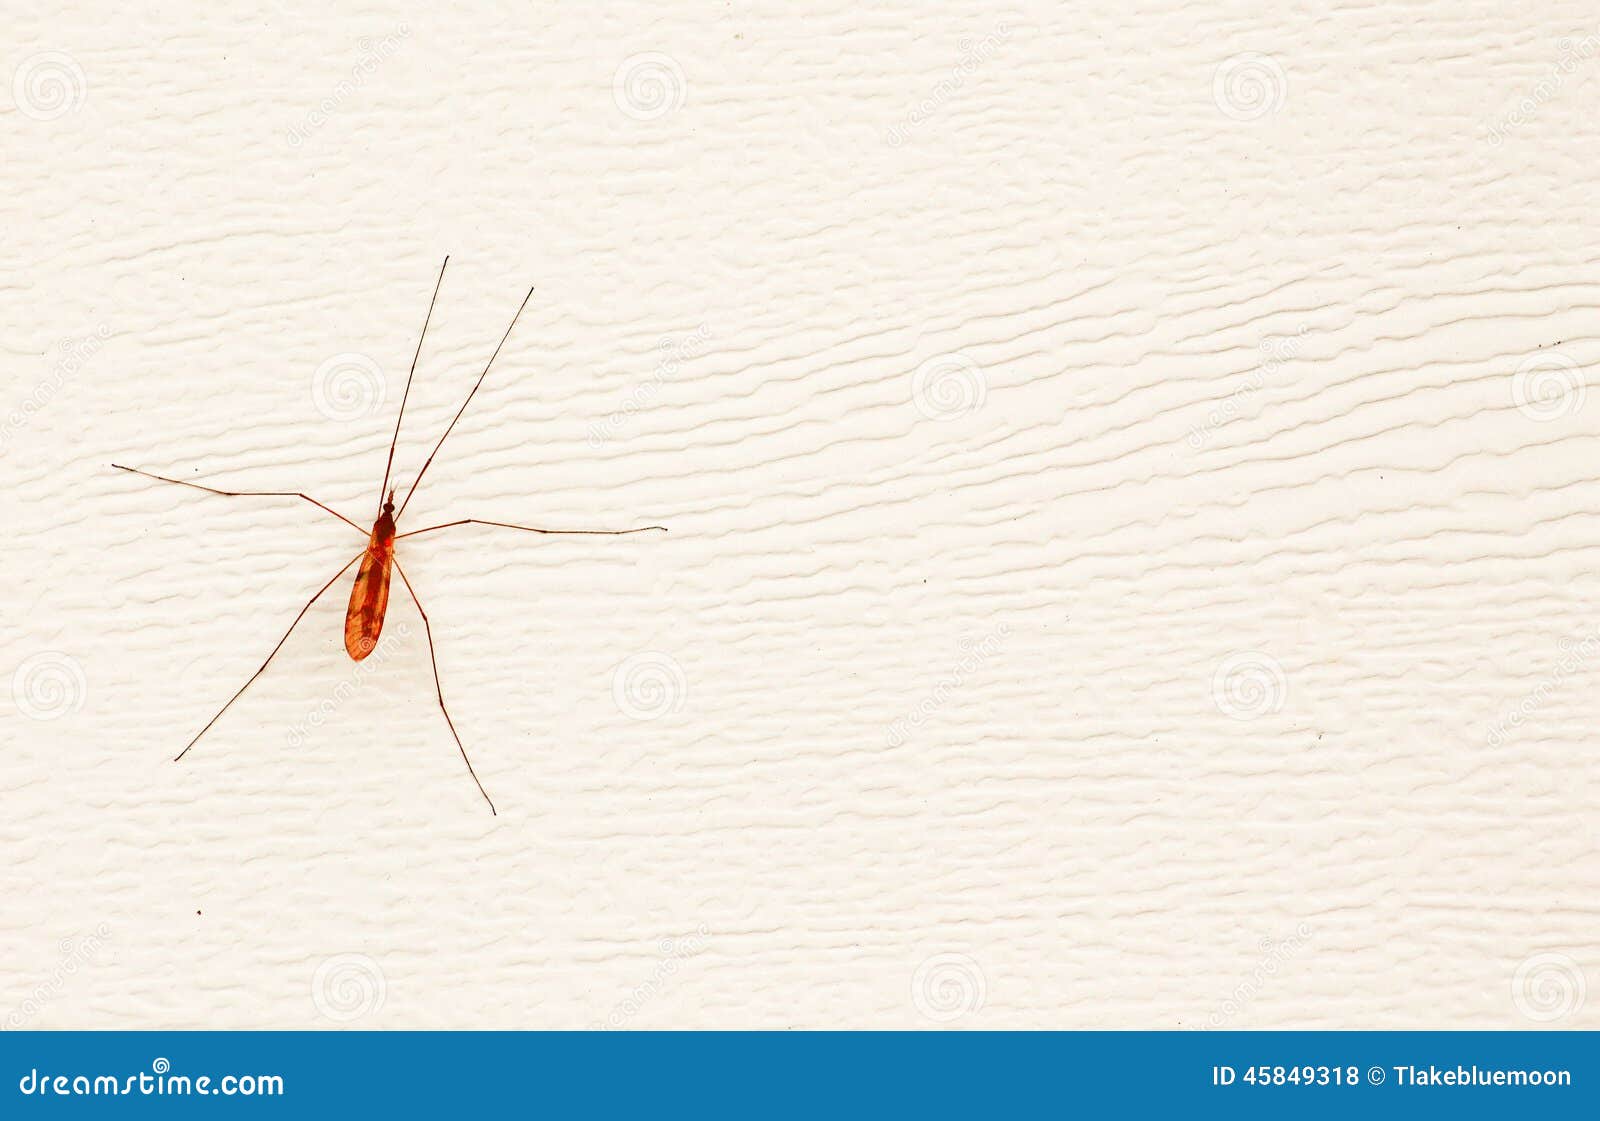 Mosquito Catcher stock photo. Image of summer, bite, large - 45849318